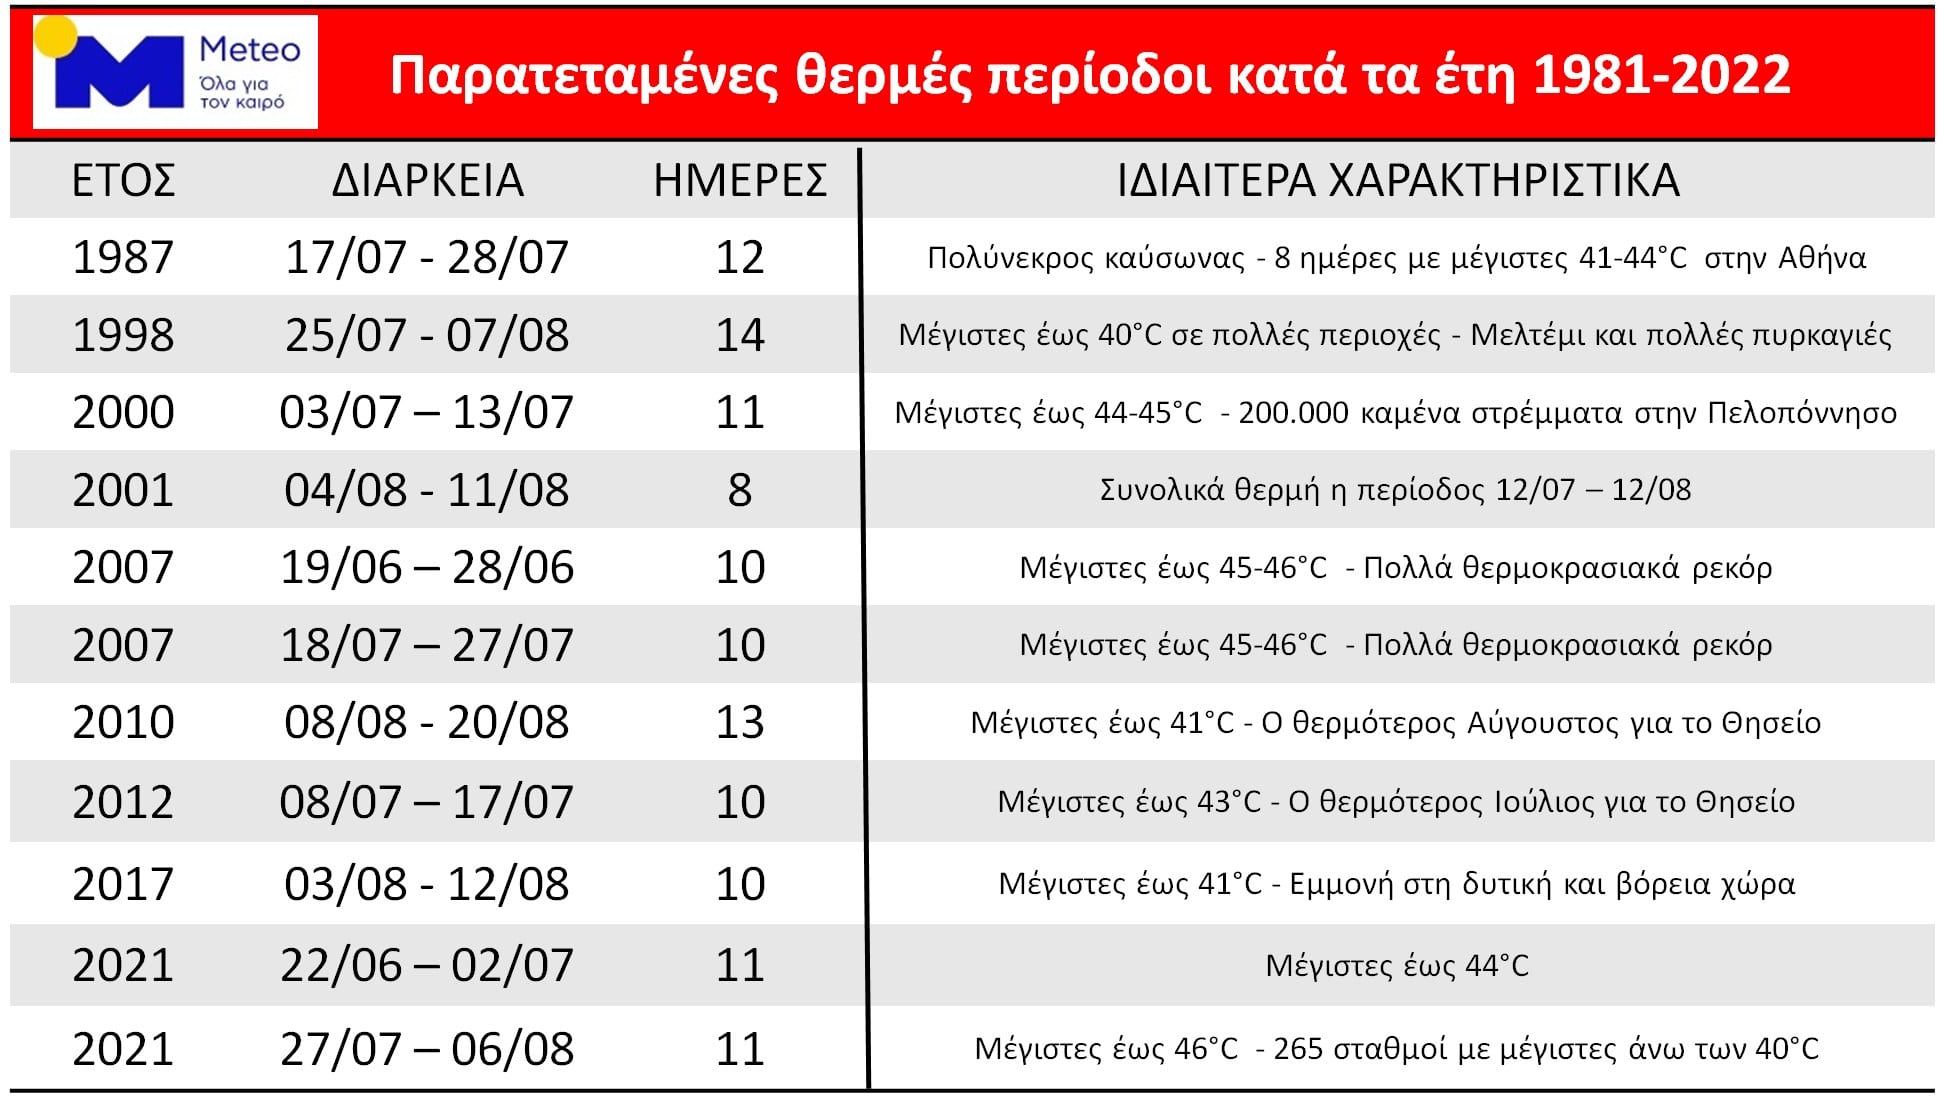 kausonas 10 7 - Σε τροχιά καύσωνα η Ελλάδα – Αυτοί είναι οι δέκα χειρότεροι από το 1981 (λίστα)